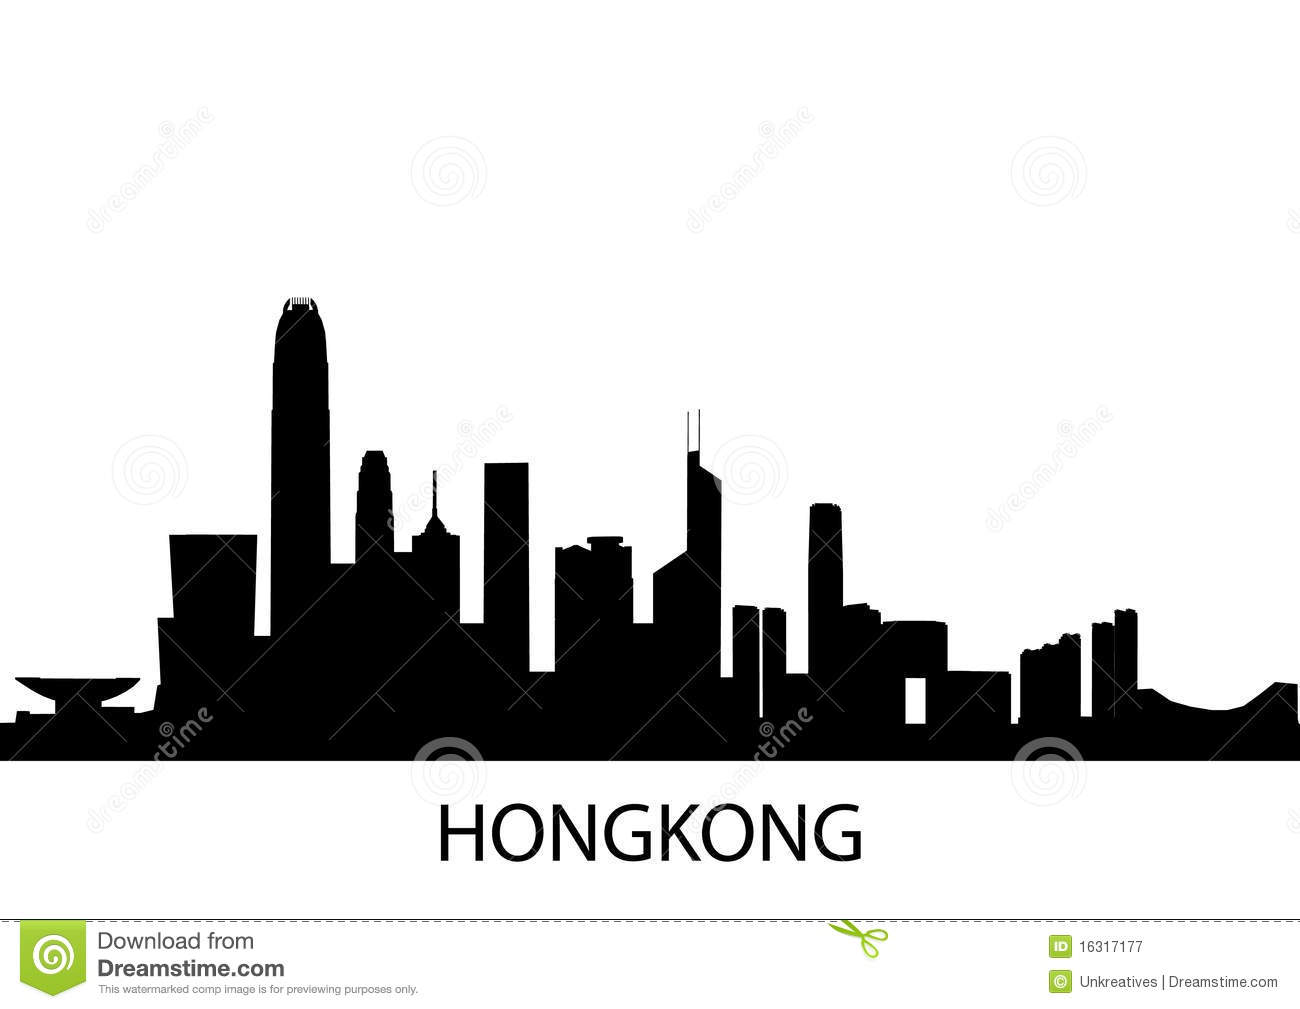 Hongkong clipart #5, Download drawings